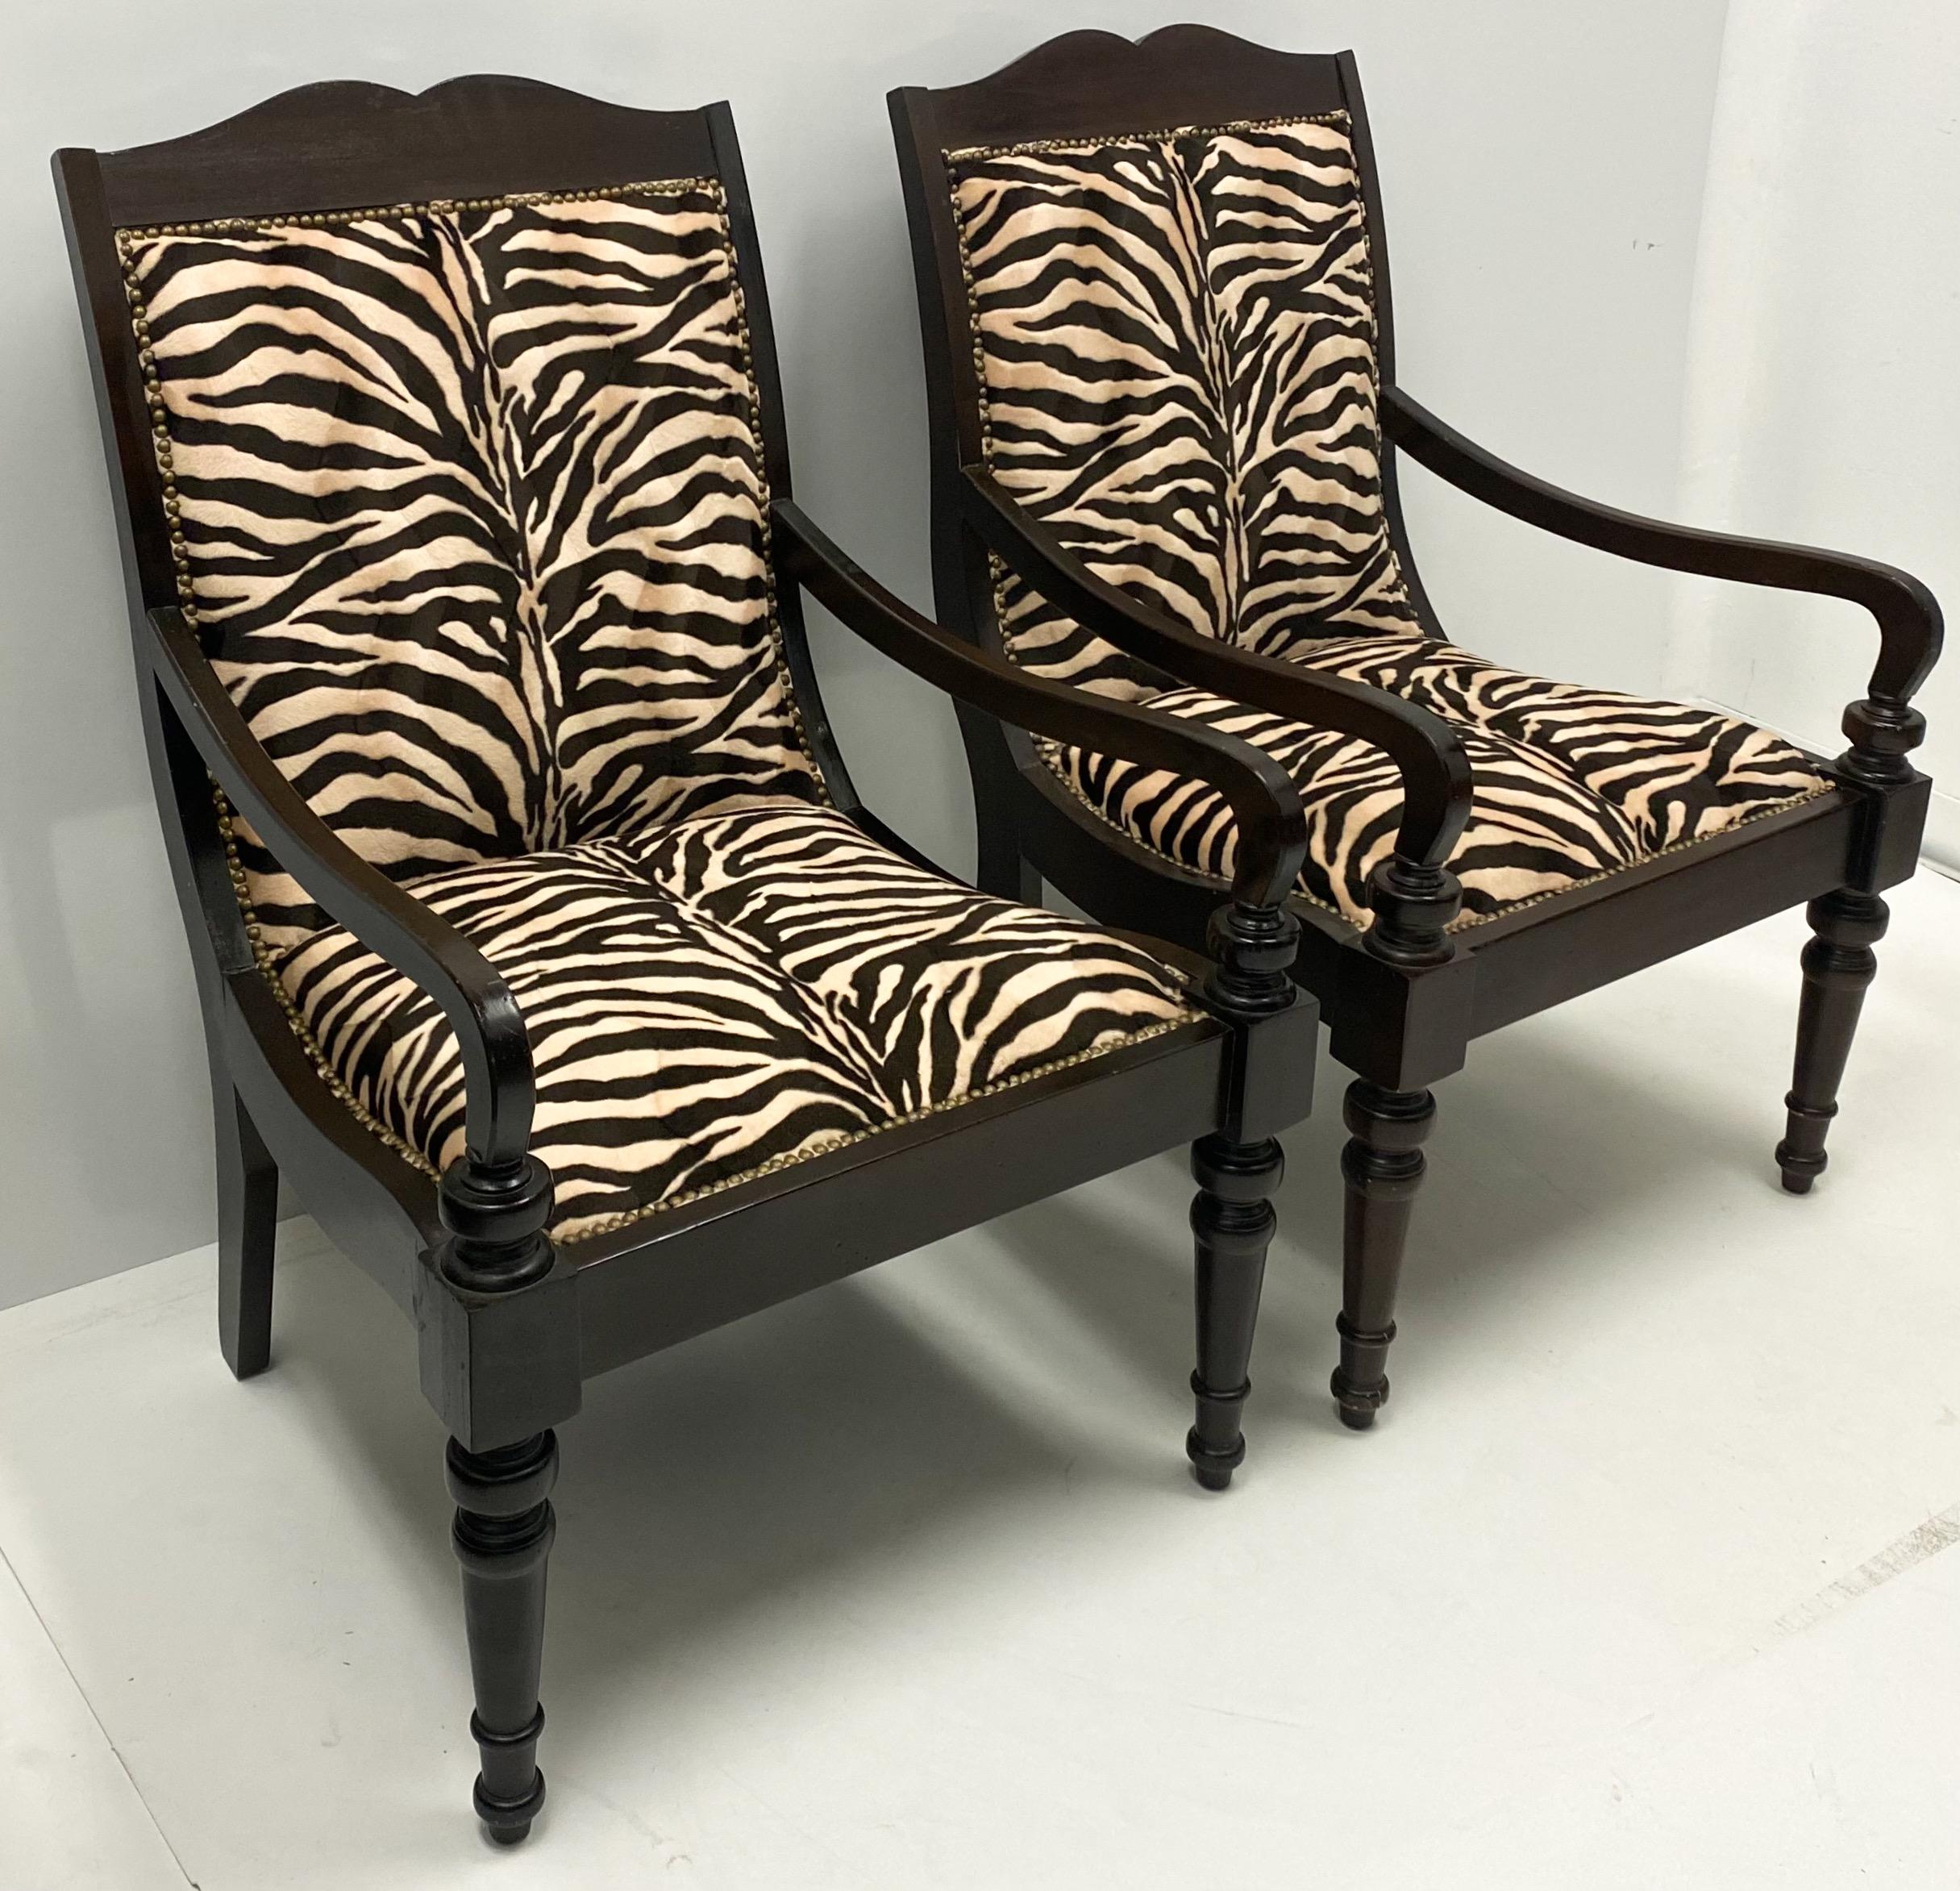 American Ebonized British Colonial Style Lillian August Chairs in Zebra Velvet, Pair